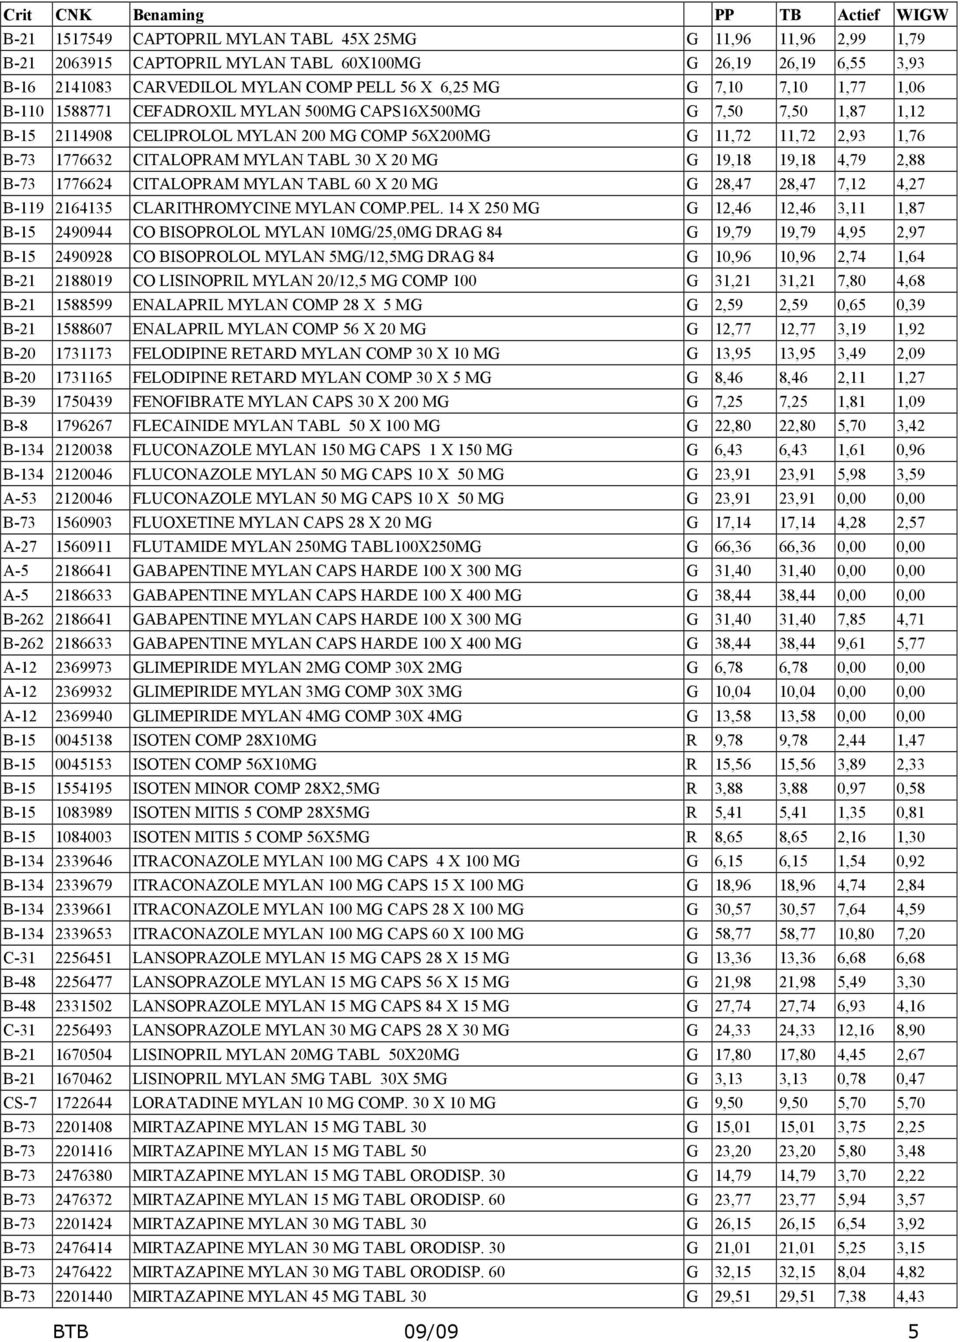 CITALOPRAM MYLAN TABL 60 X 20 MG G 28,47 28,47 7,2 4,27 B-9 26435 CLARITHROMYCINE MYLAN COMP.PEL.